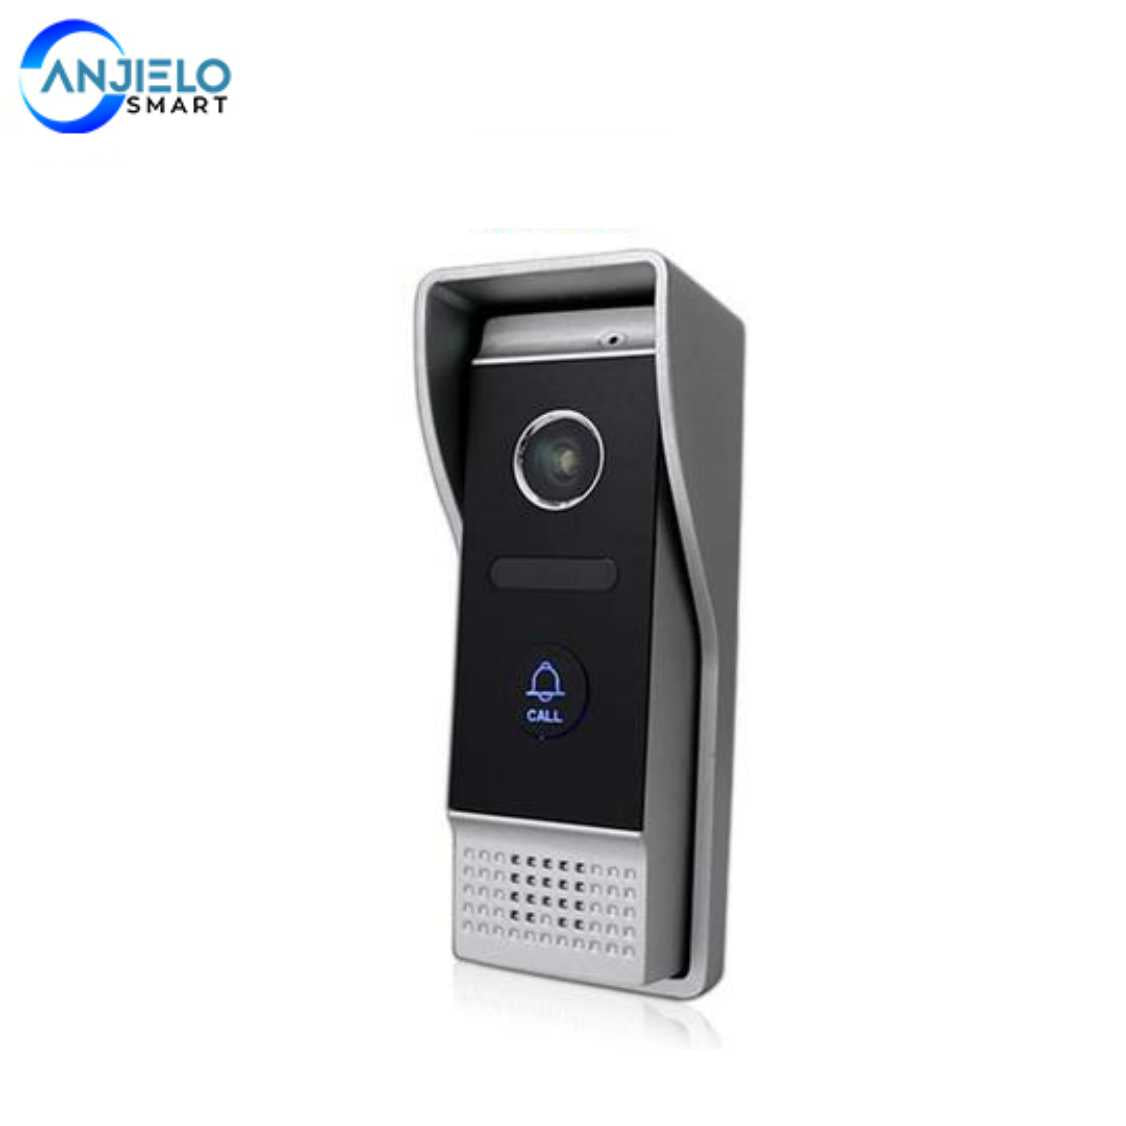 Smart Home Video Door Phone Intercom System 7 "Color Screen Monitor Wide Angle 1080P FHD Doorbell Tuya App Remote Control Unlock